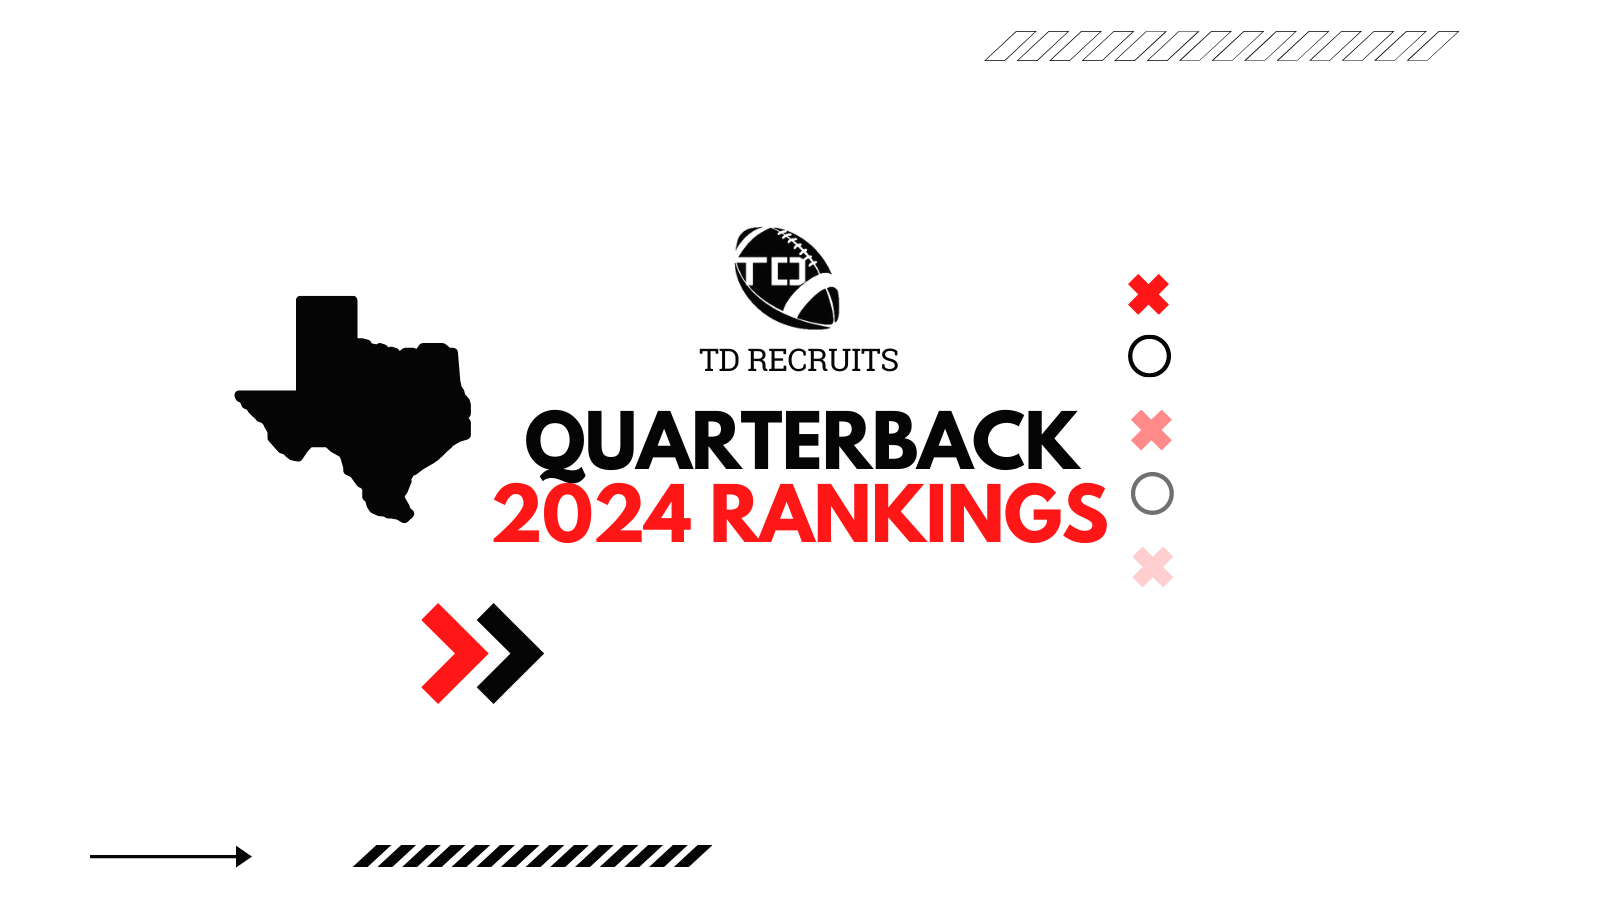 2024 Quarterback Rankings tdrecruits